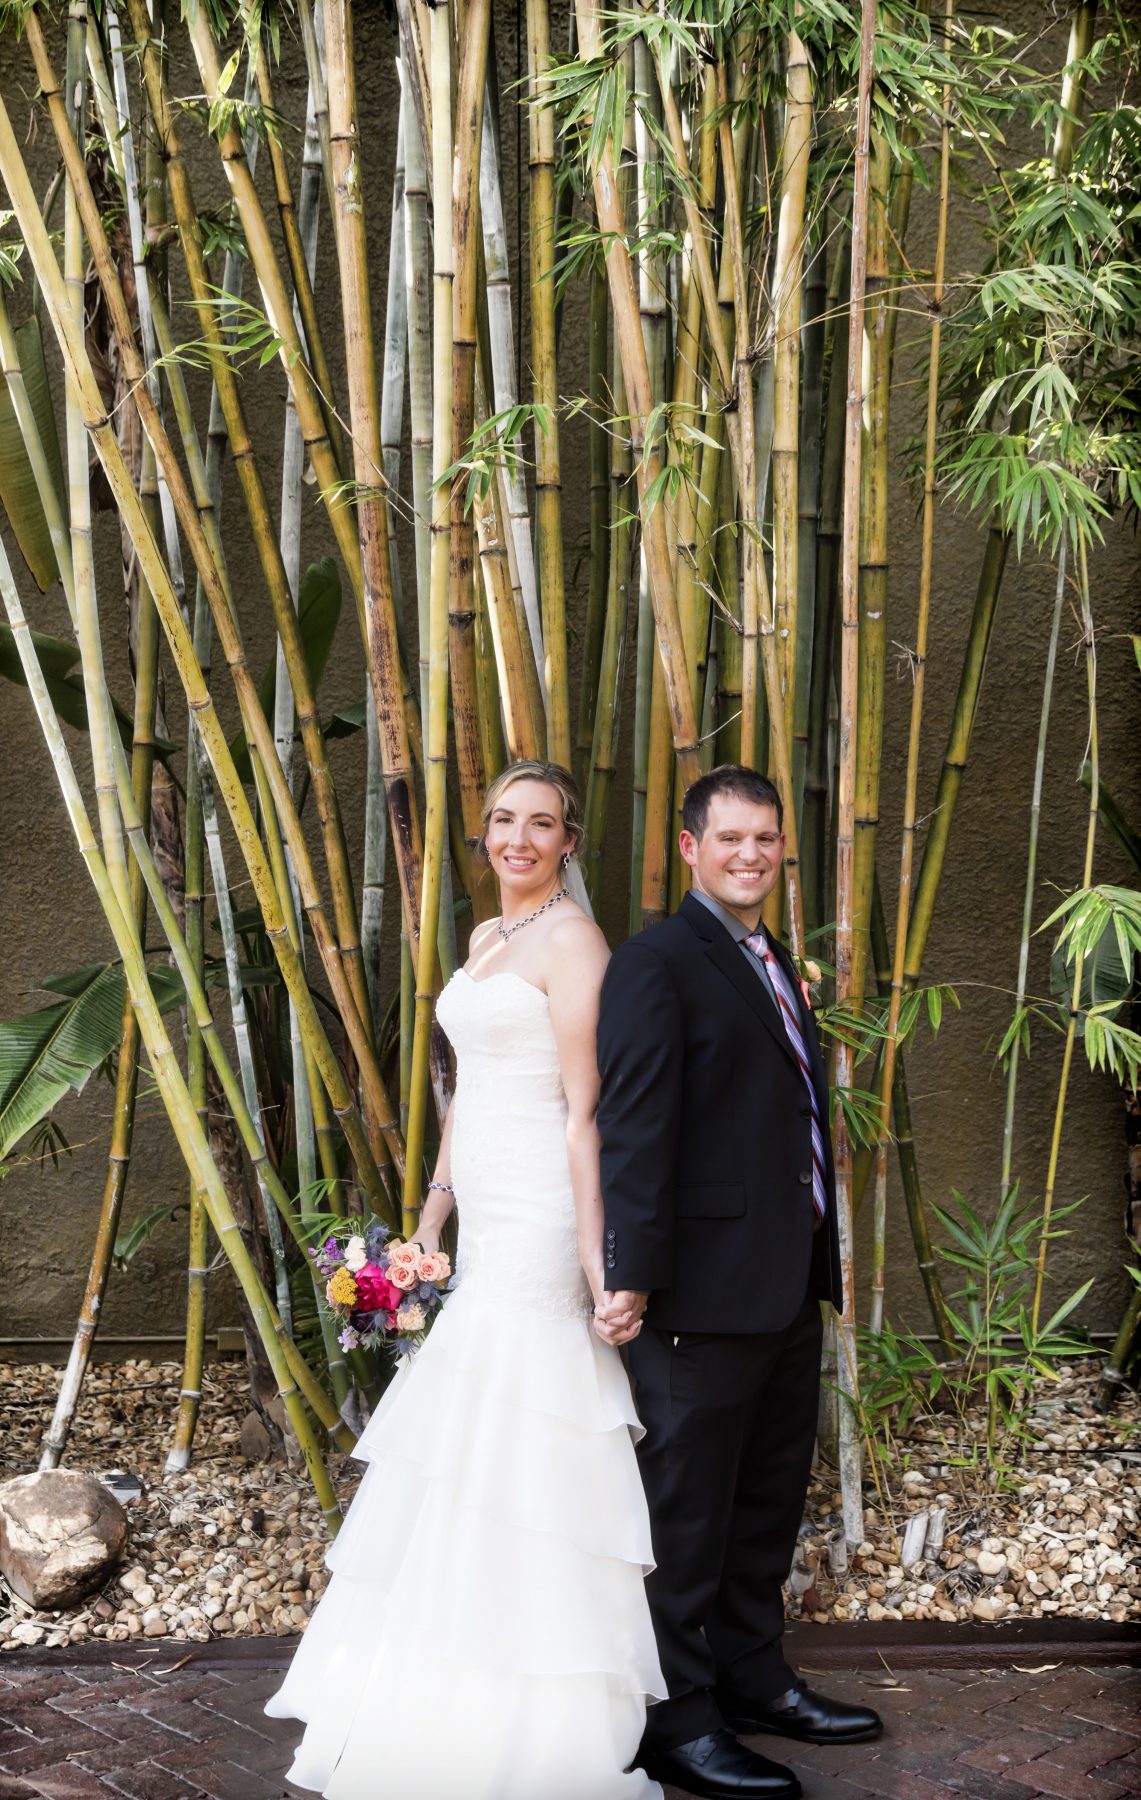 Florida Bride and Groom in romantic bamboo garden at Downtown St. Pete Unique Wedding Venue NOVA 535